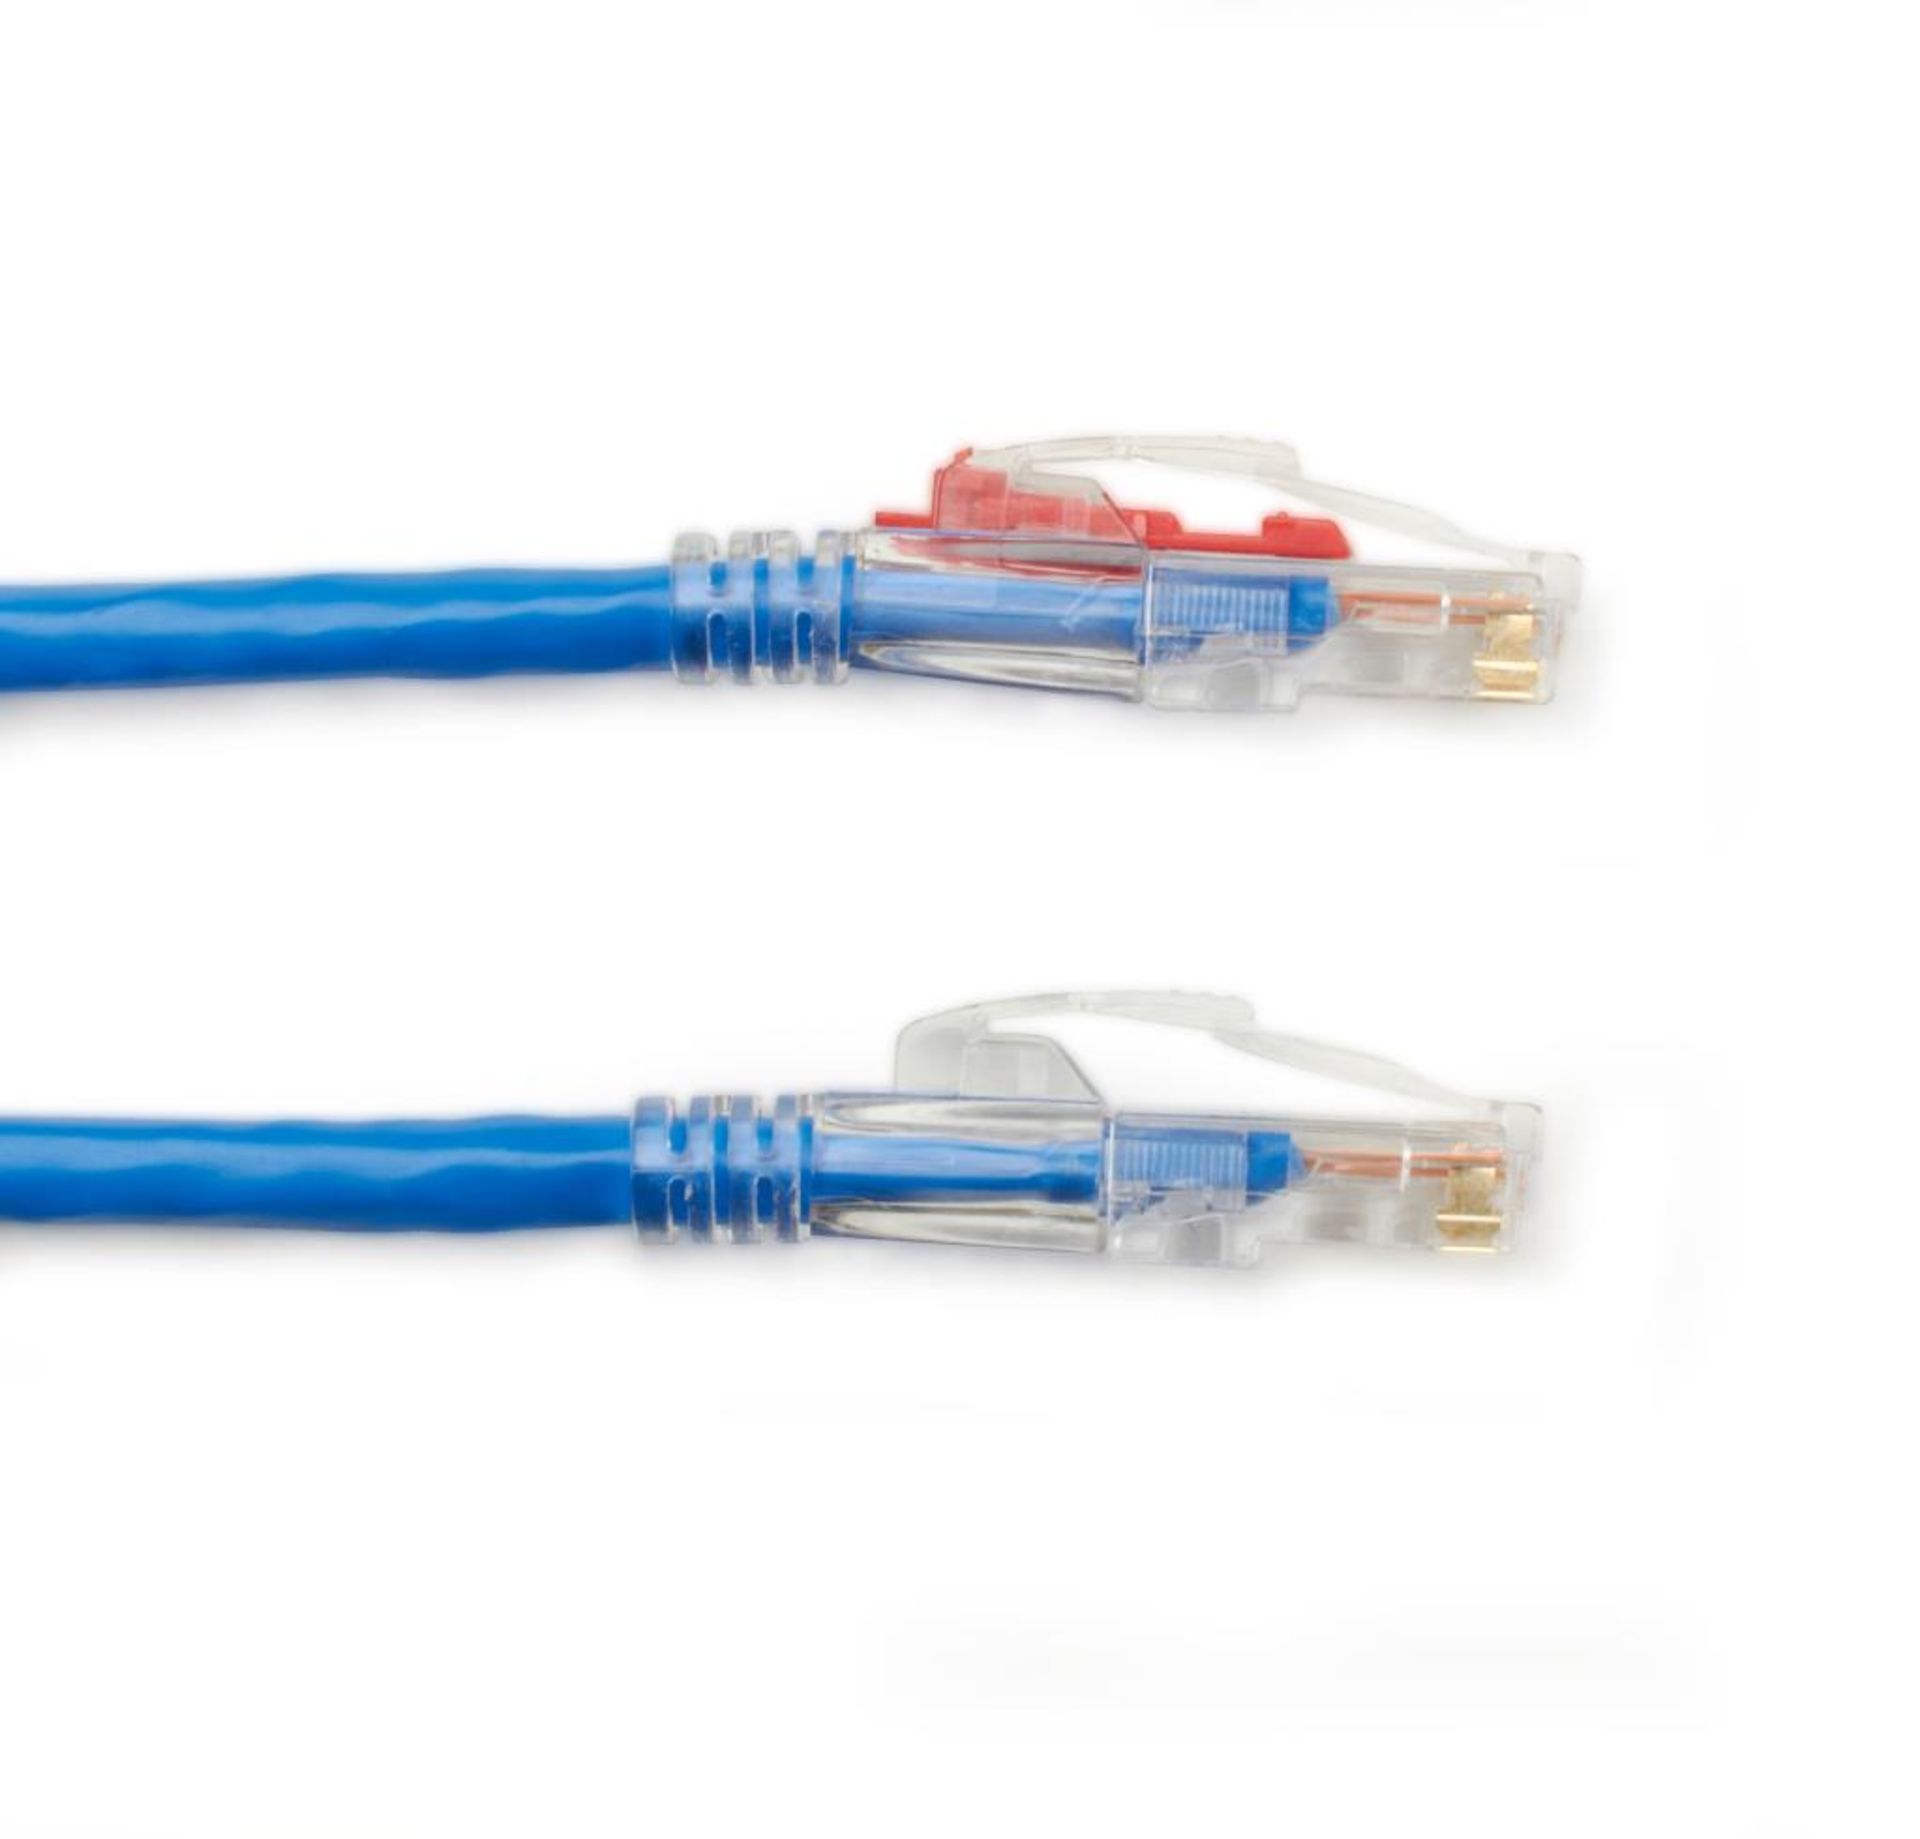 CAT5e Ethernet Patch Cables, Assorted Lengths, Blue